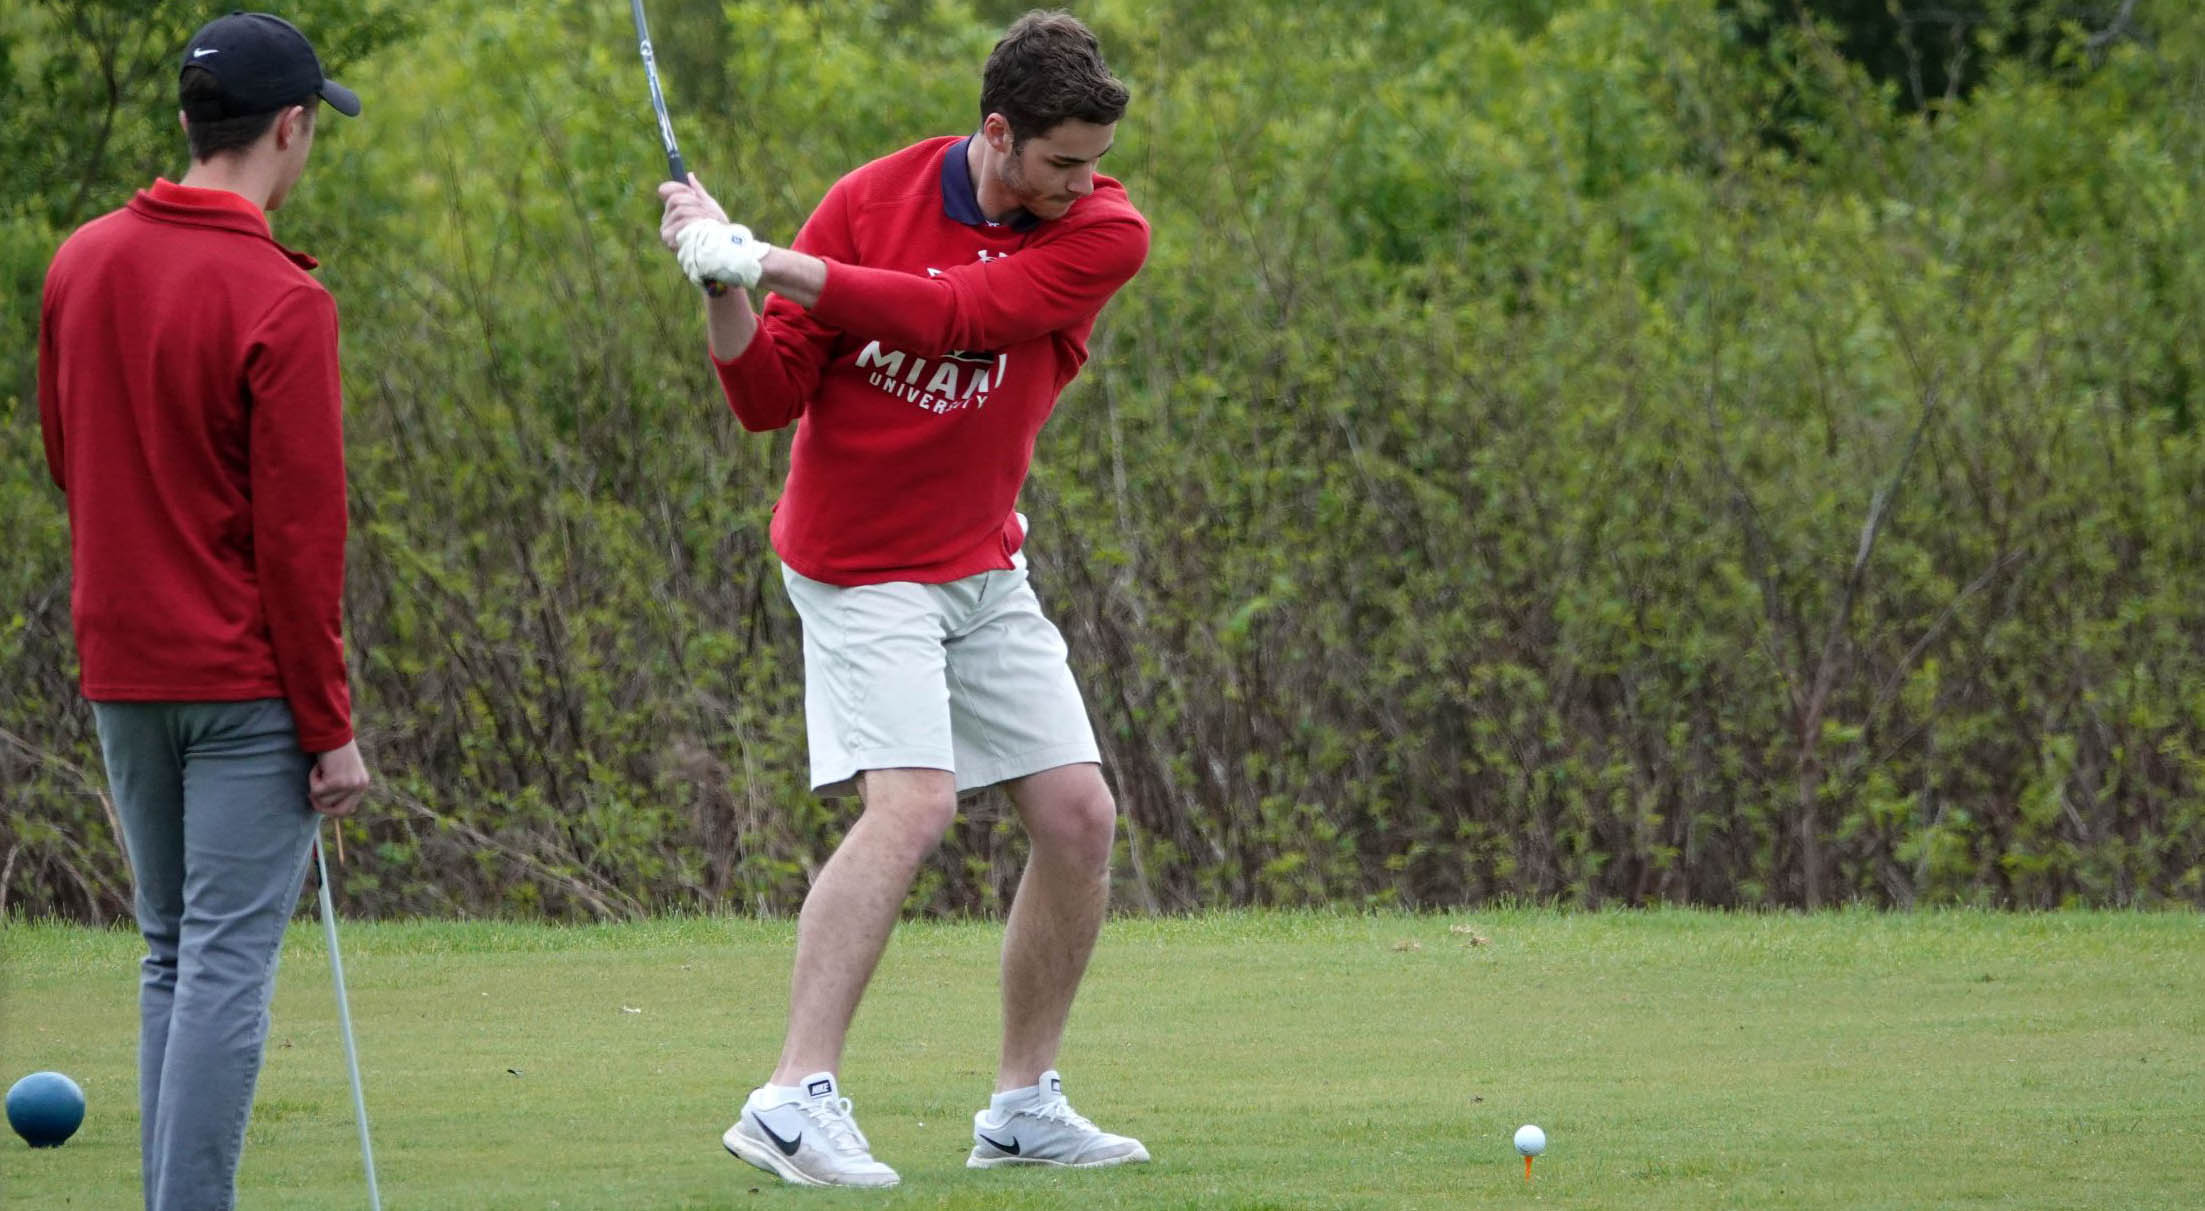 Golfer swinging at ball